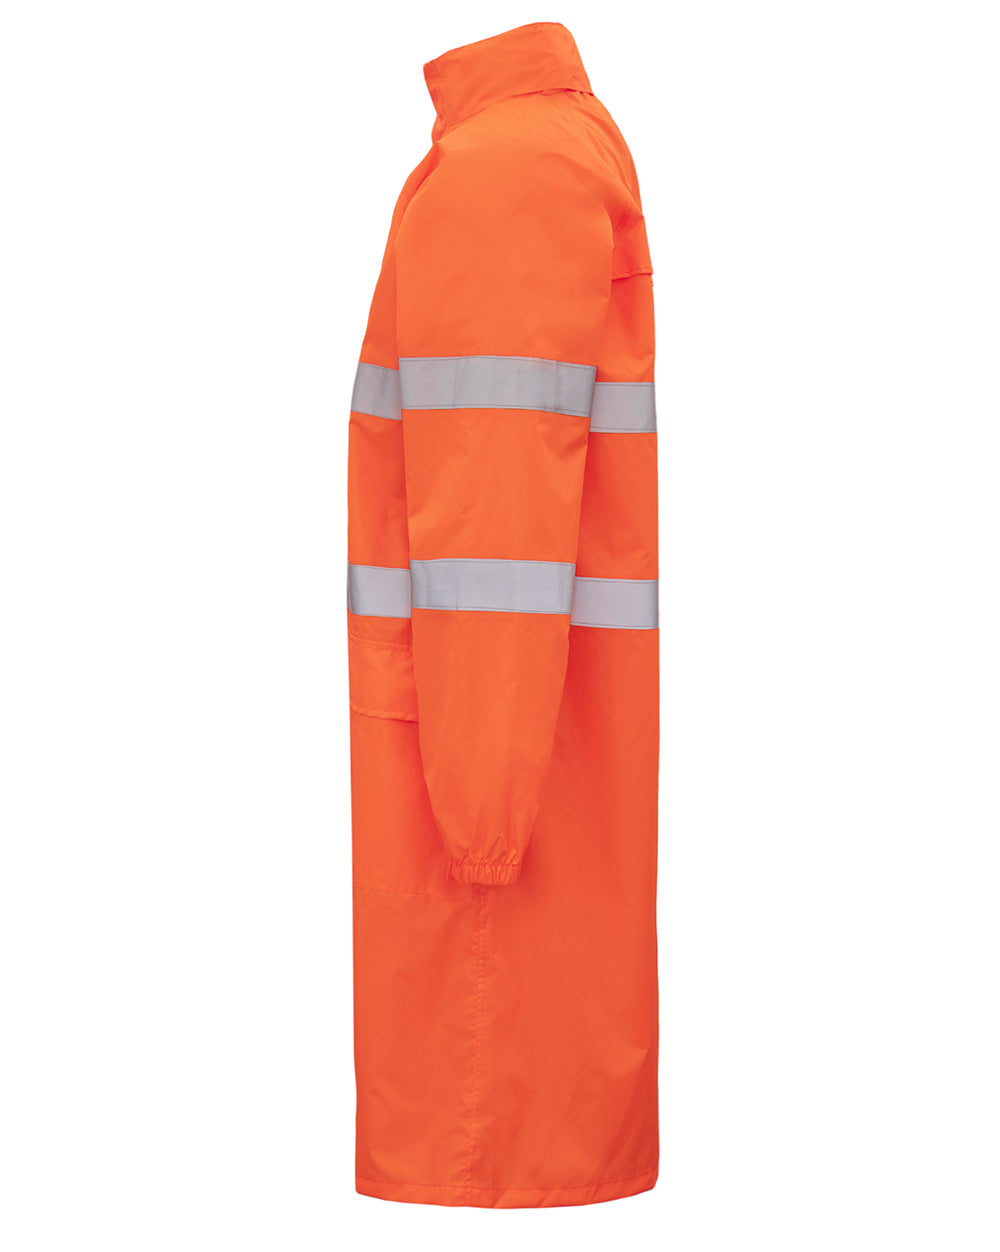 Eales Long Jacket with Tape in Fluoro Orange